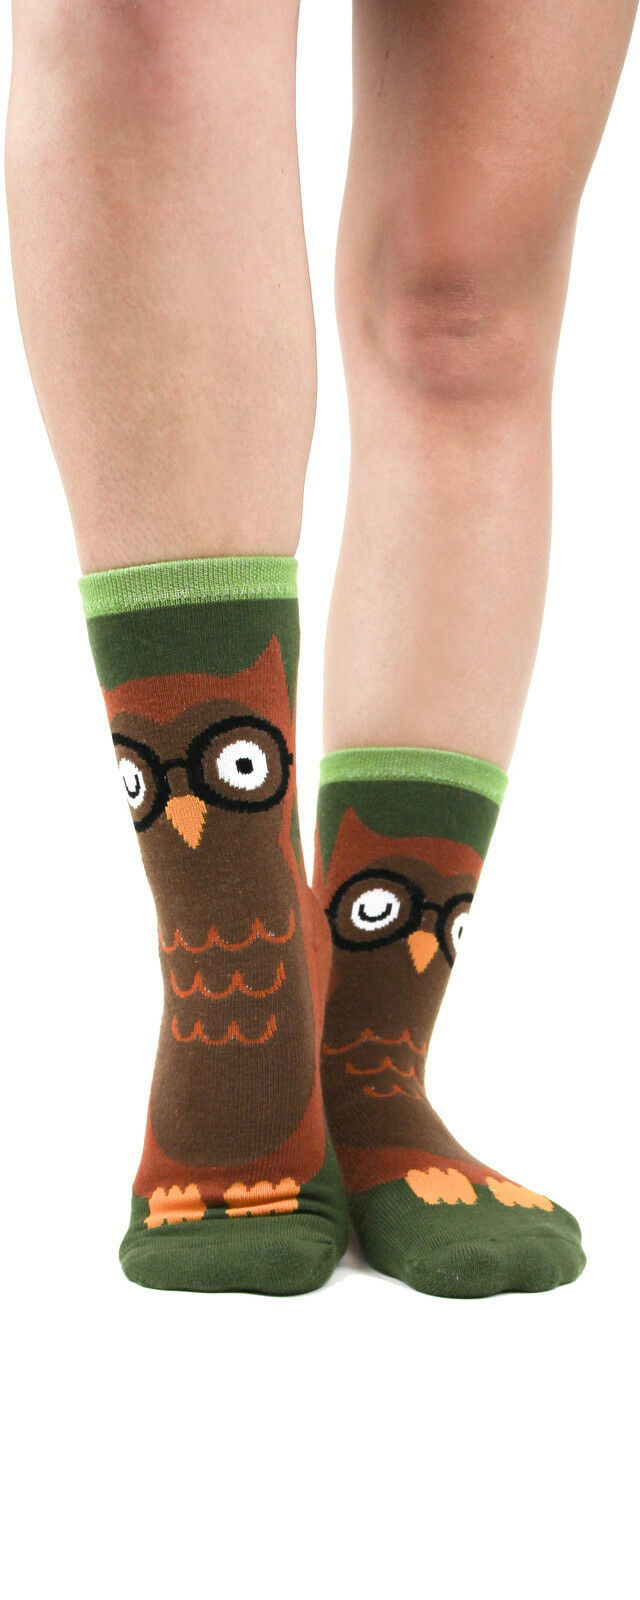 Owl Foot Traffic Slipper Socks Non-Skid New Women's Size 9-11 Bird Fashion